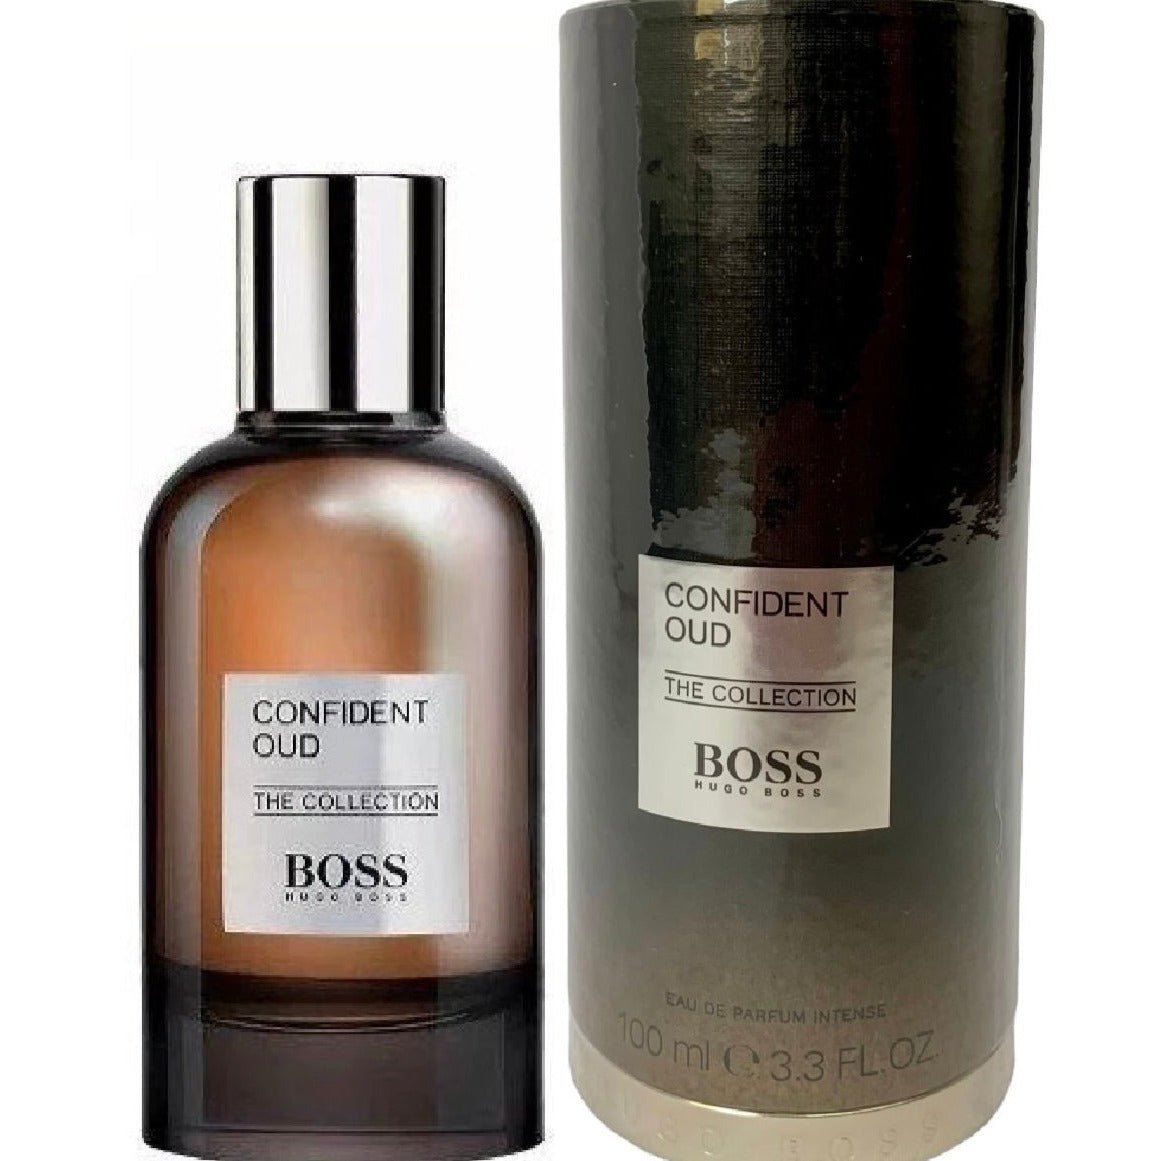 Hugo Boss Boss The Collection Confident Oud EDP Intense | My Perfume Shop